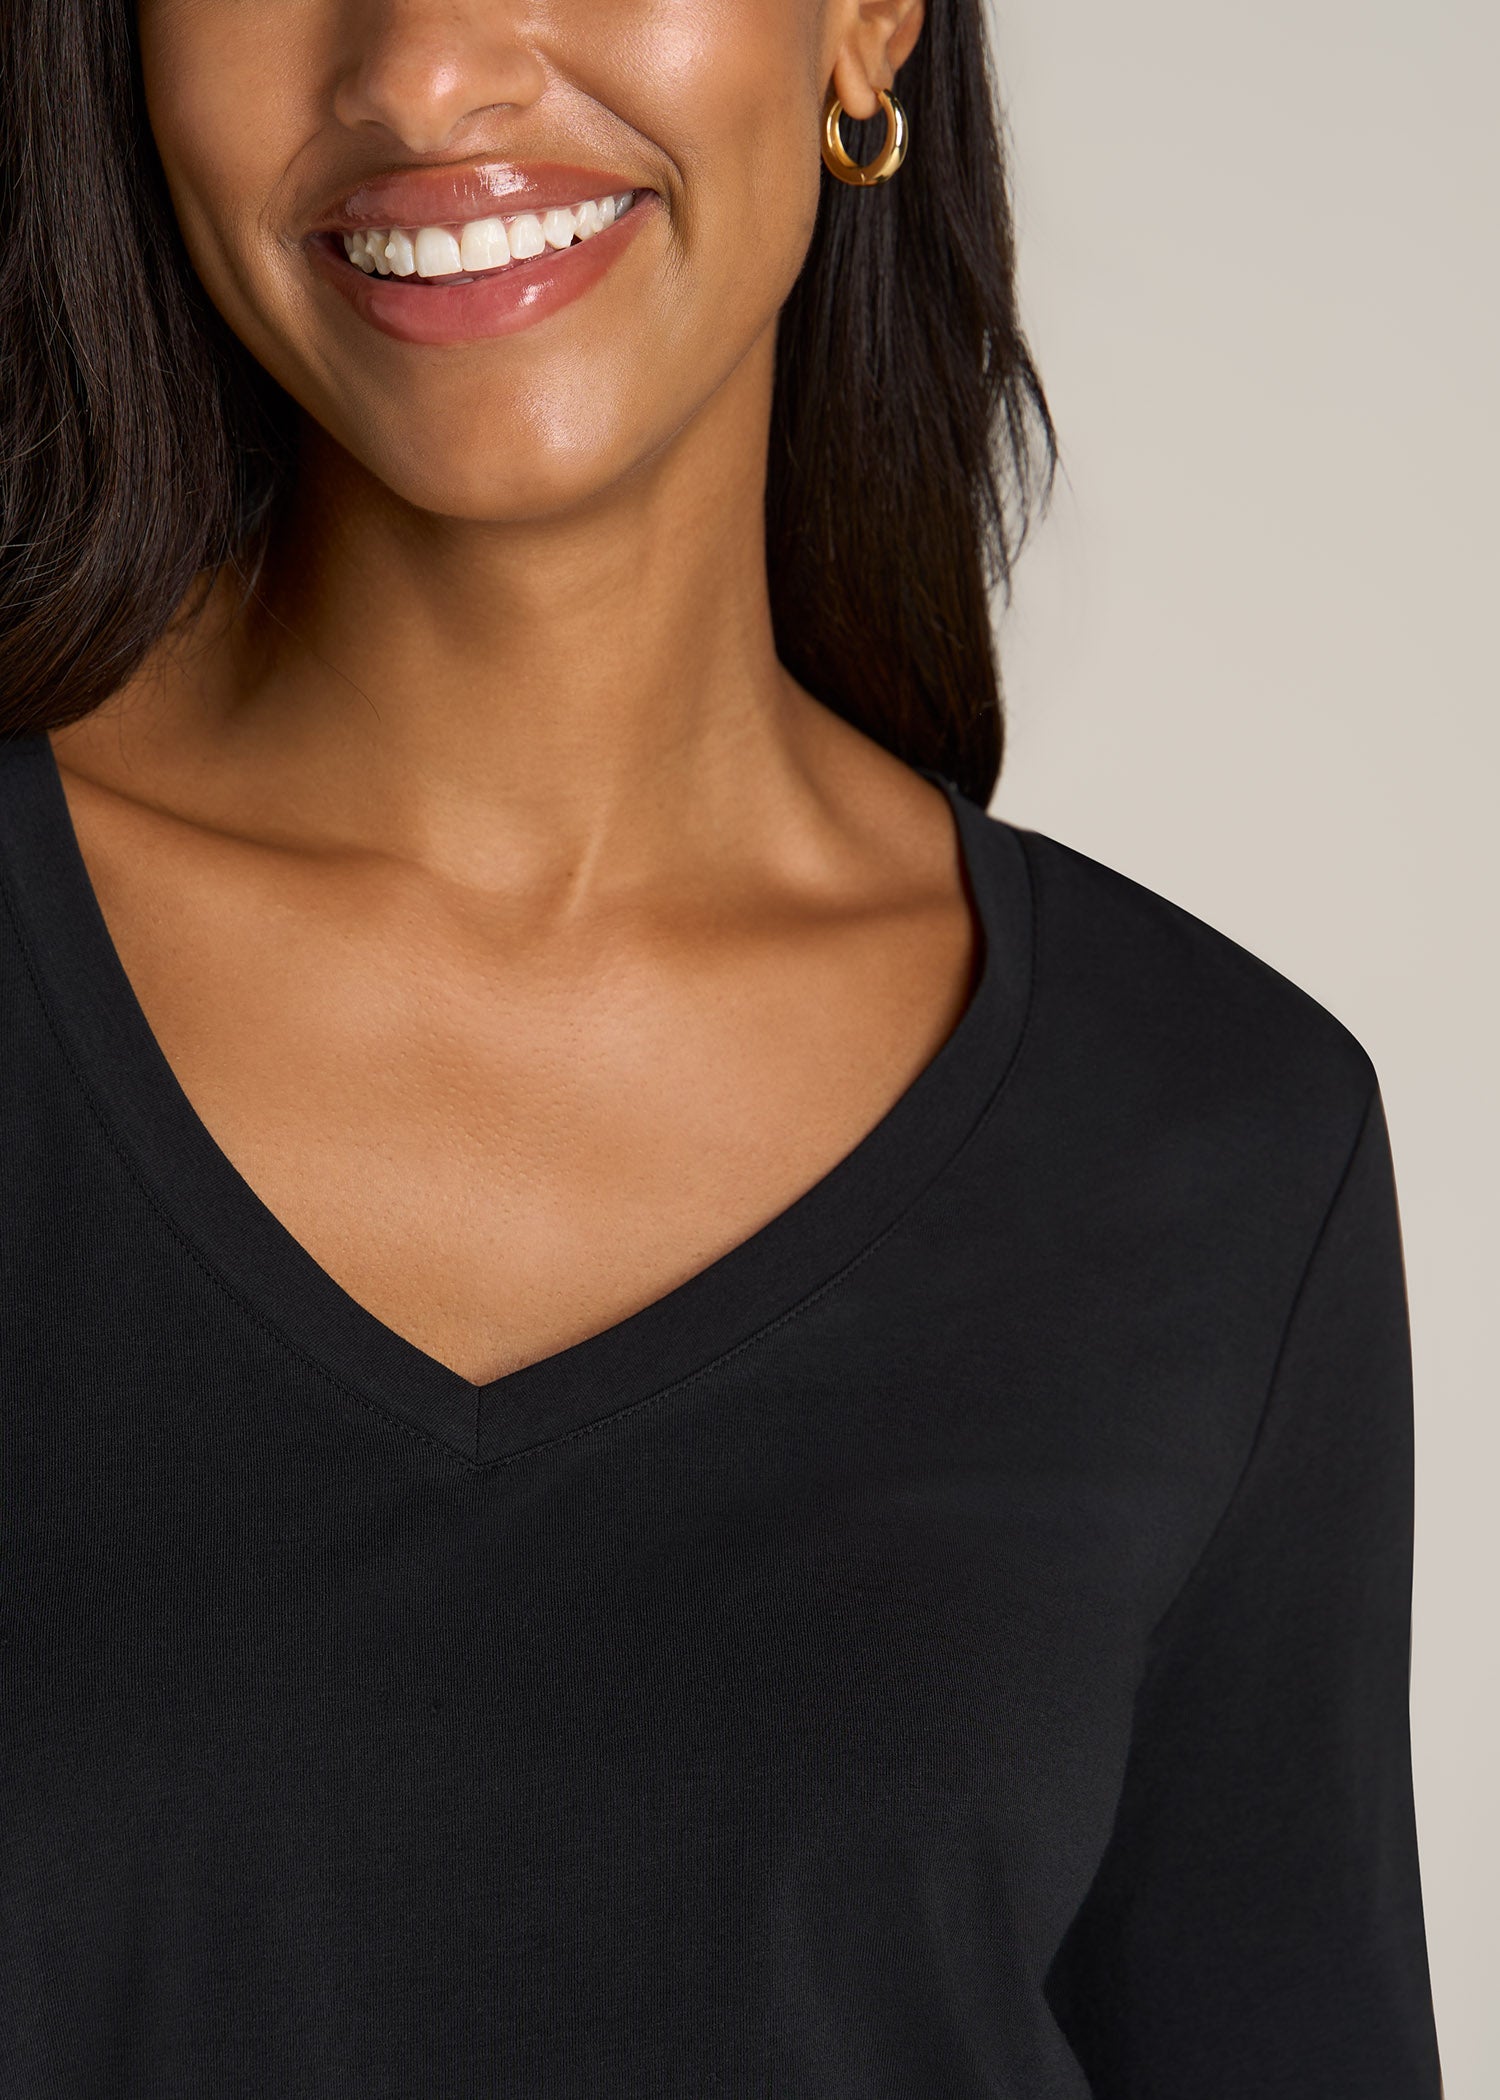 Women's Tall V-Neck Tee Shirts: Black Scoop Neck Tee